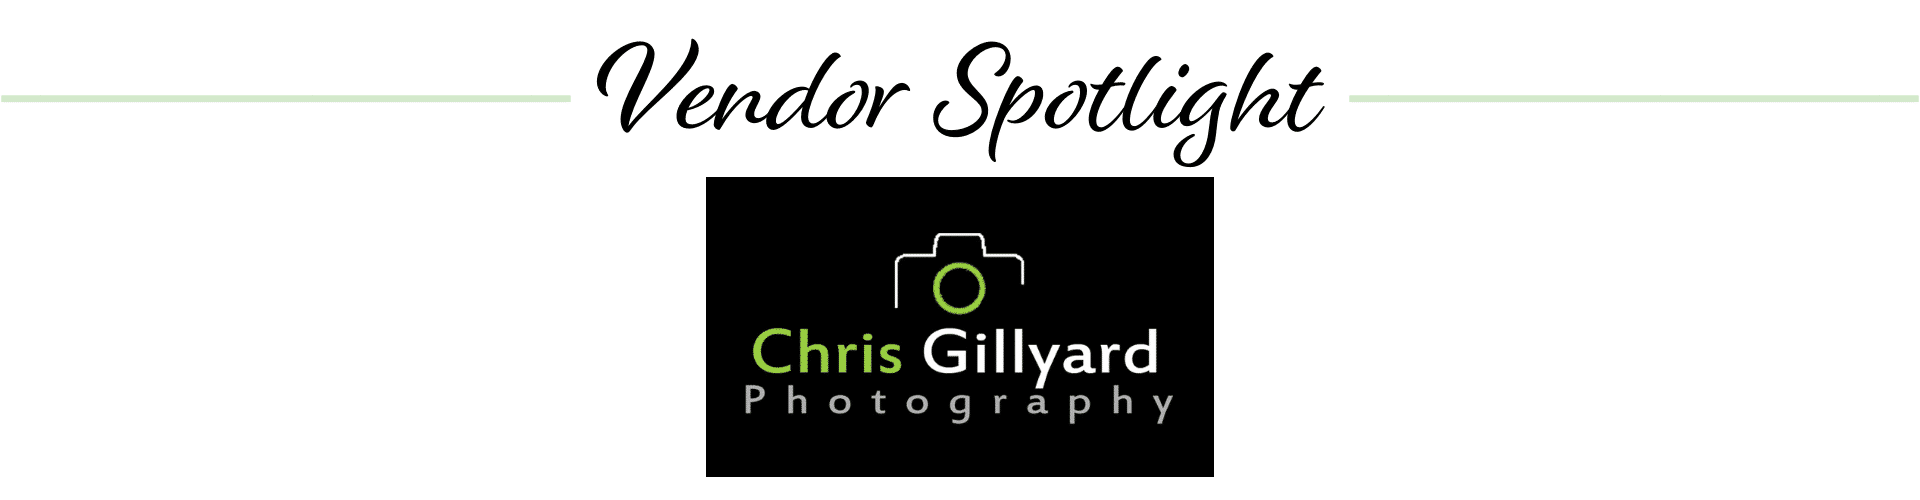 Chris Gillyard Photography logo